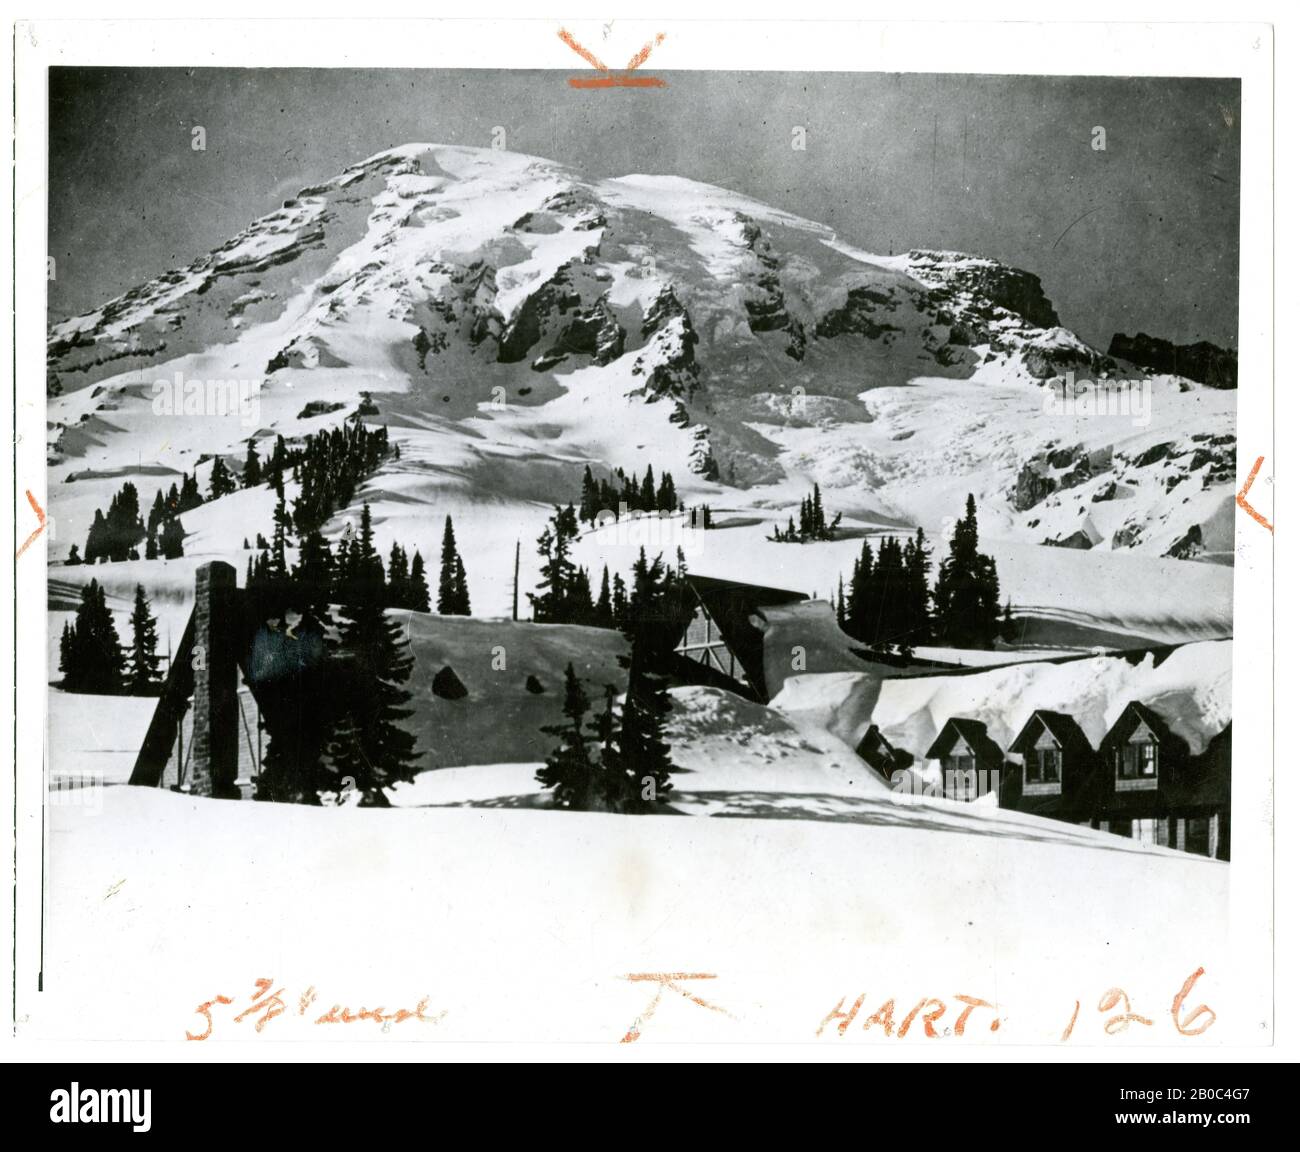 Keystone View Co. Inc. of N.Y. Photographer, Paradise Inn, Mt. Rainer National Park, Washington, 4/22/1930, gelatin silver print Stock Photo